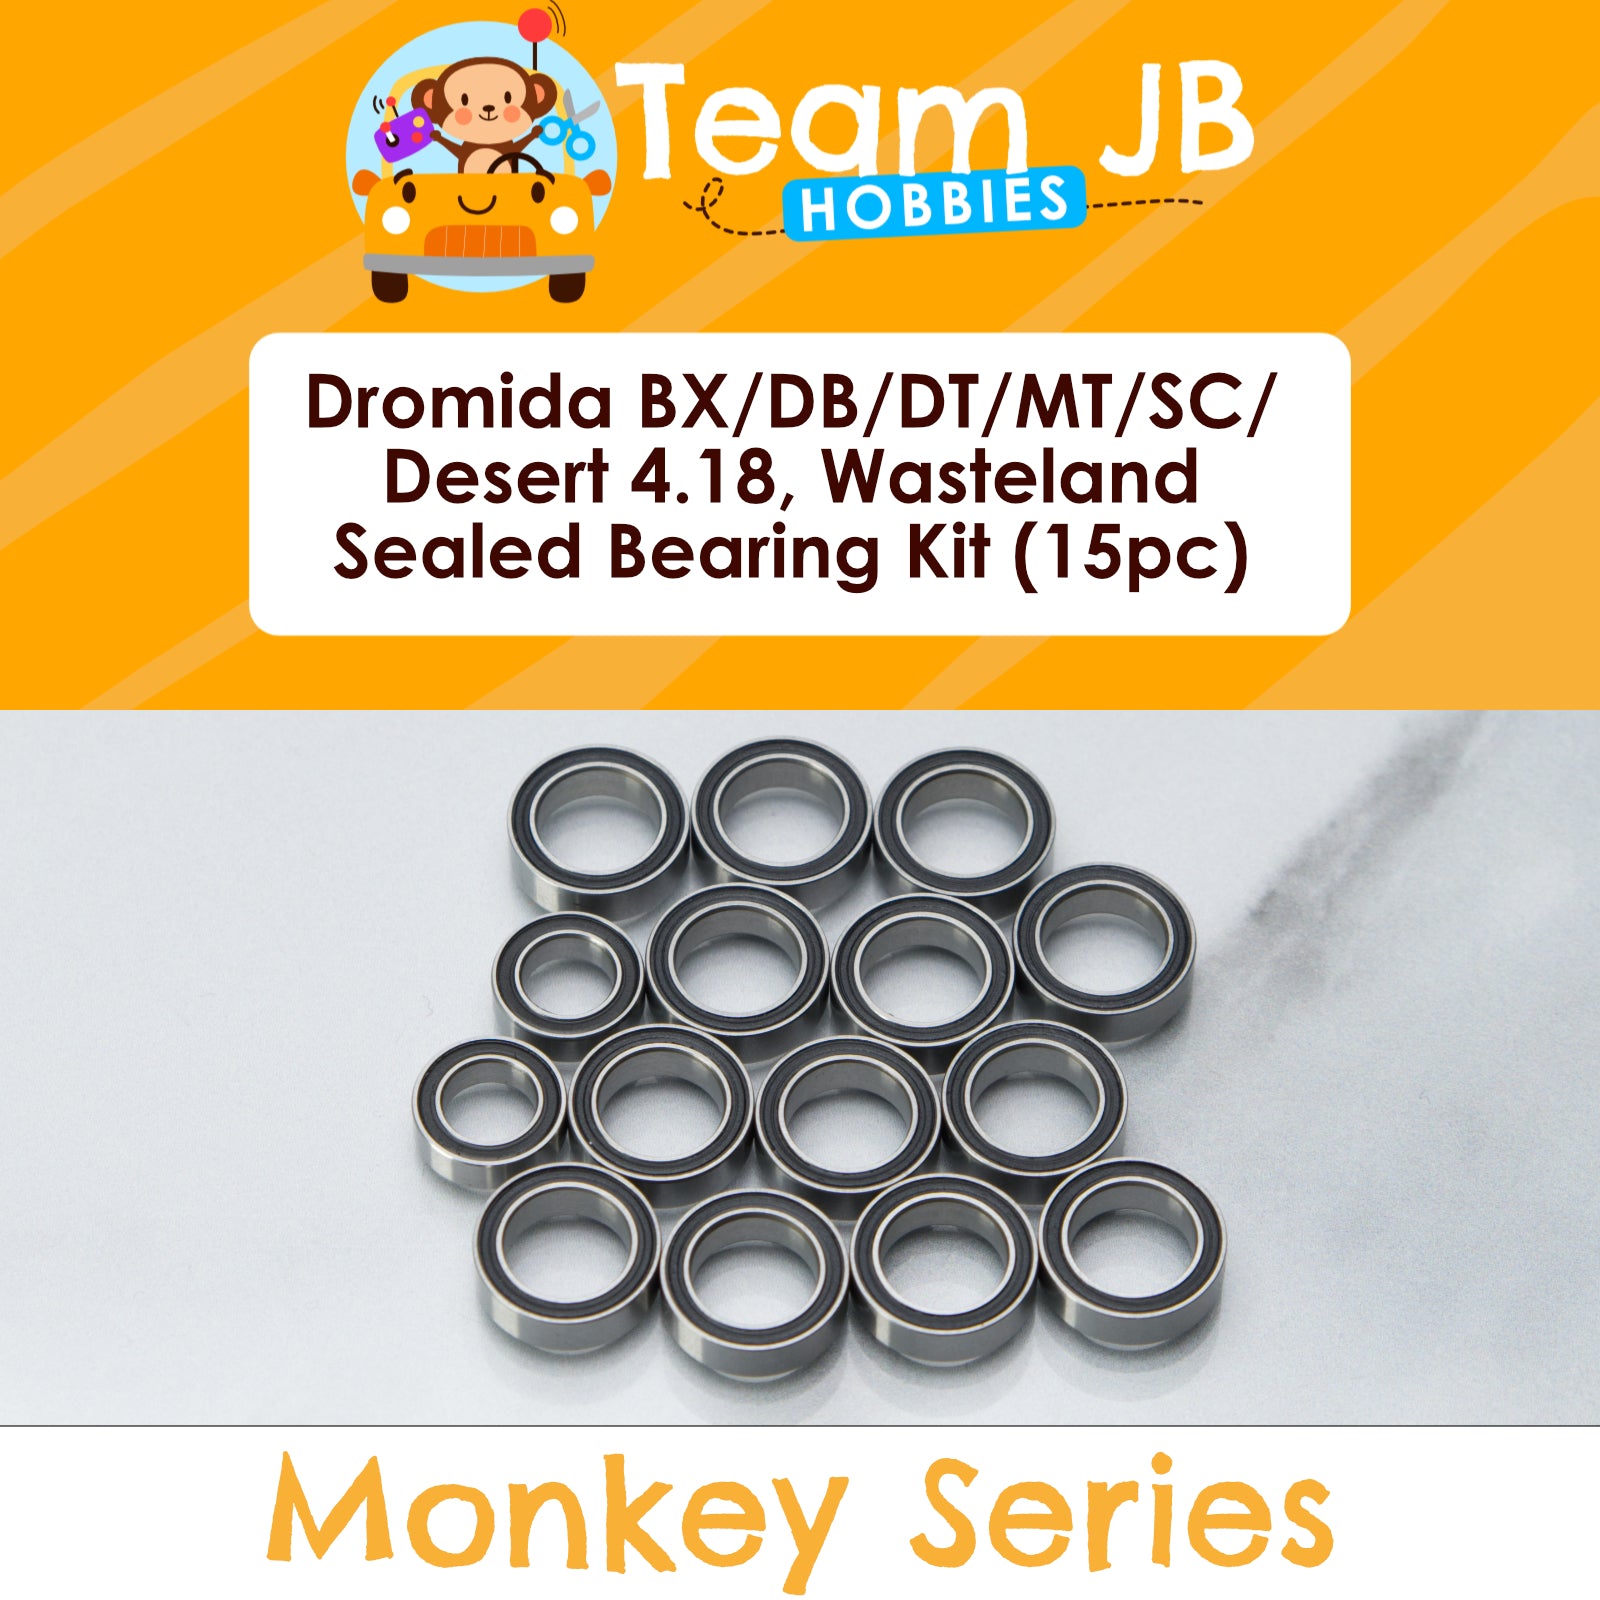 Dromida BX/DB/DT/MT/SC/Desert 4.18, Wasteland Truggy/Buggy/Truck - Sealed Bearing Kit